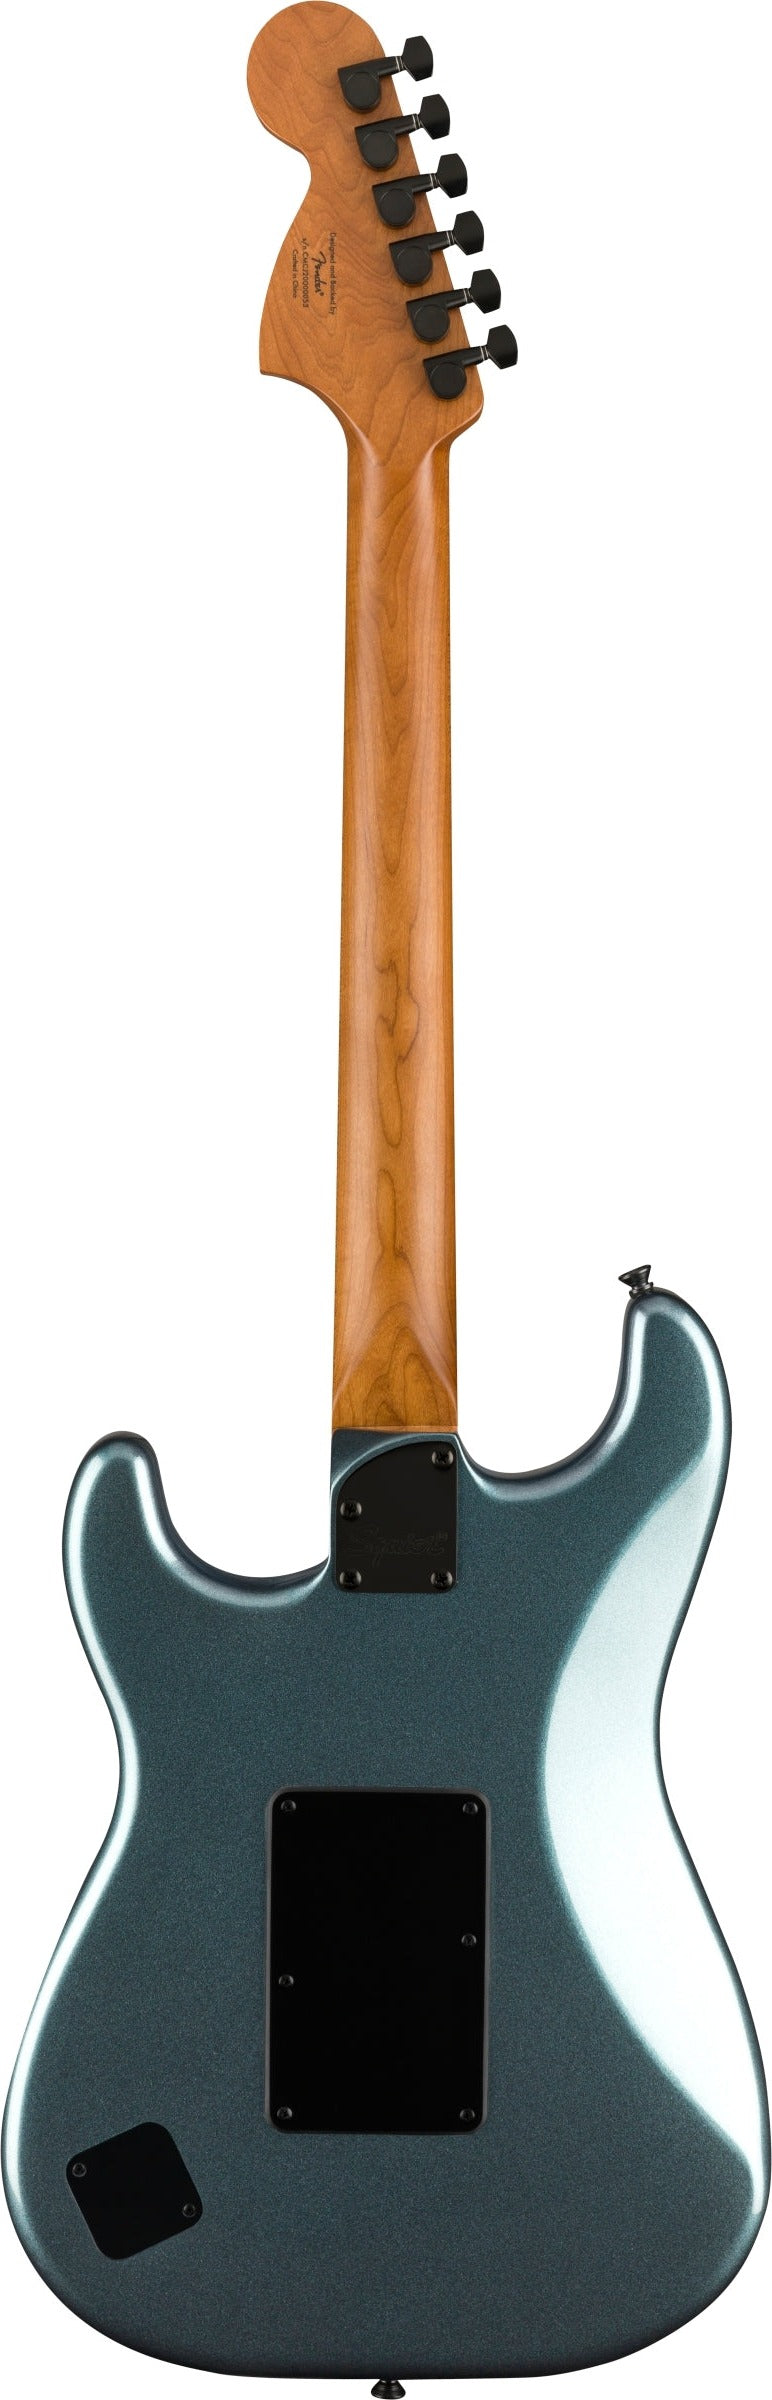 Squier Contemporary Stratocaster HH FR Electric Guitar - Gunmetal Metallic